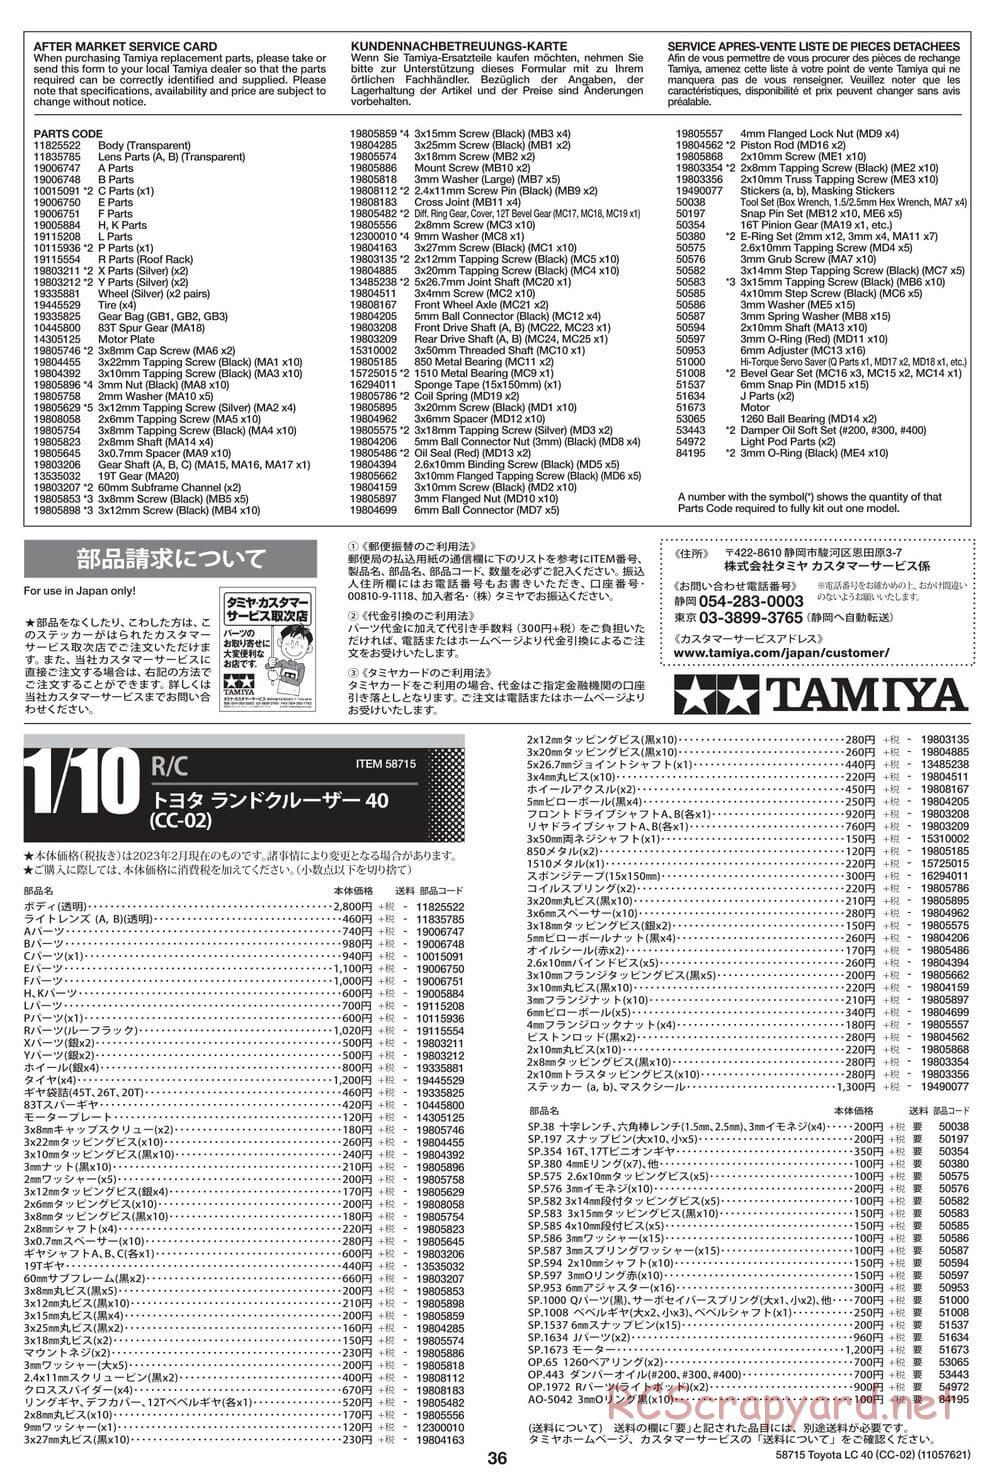 Tamiya - Toyota Land Cruiser 40 - CC-02 Chassis - Manual - Page 36